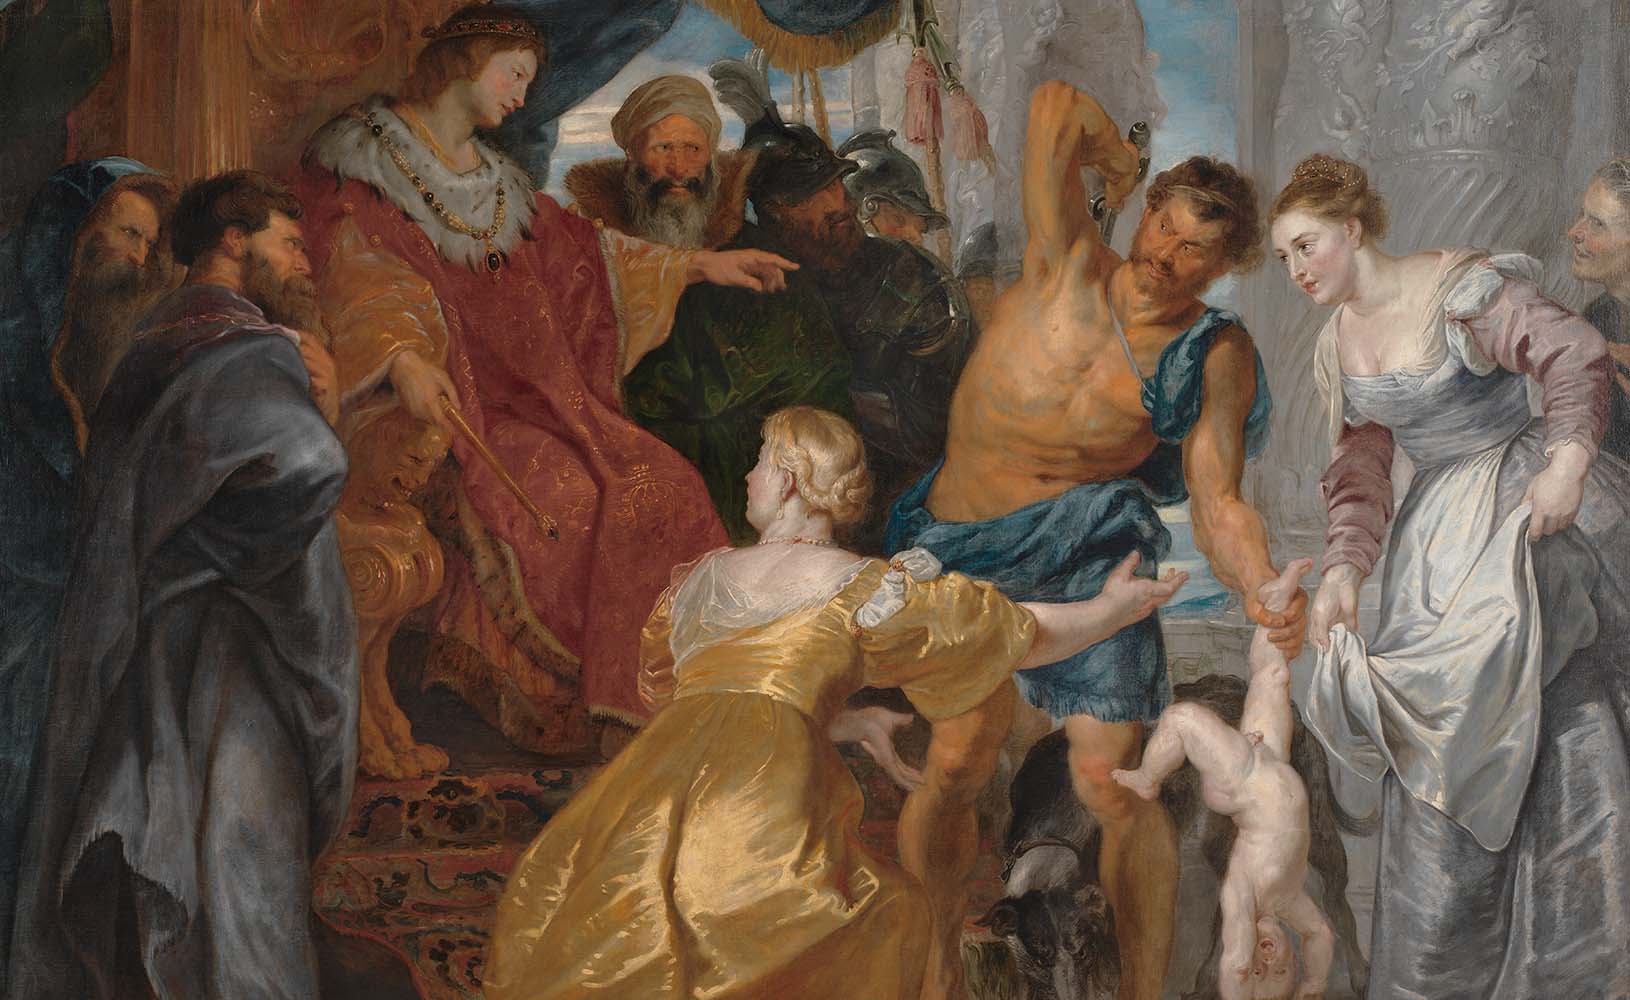 Peter Paul Rubens: The Judgement of Solomon